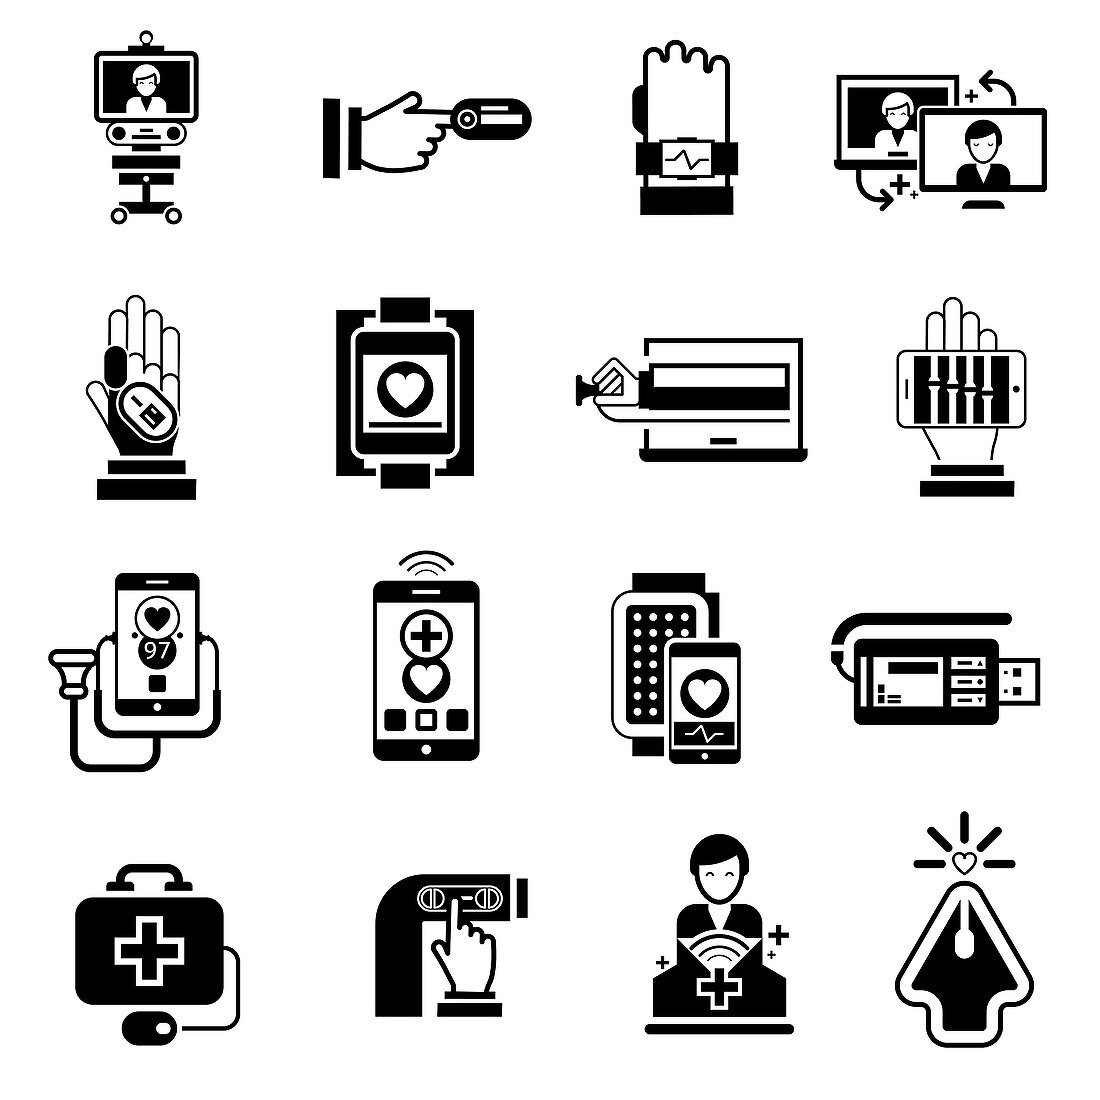 Digital medicine icons, illustration